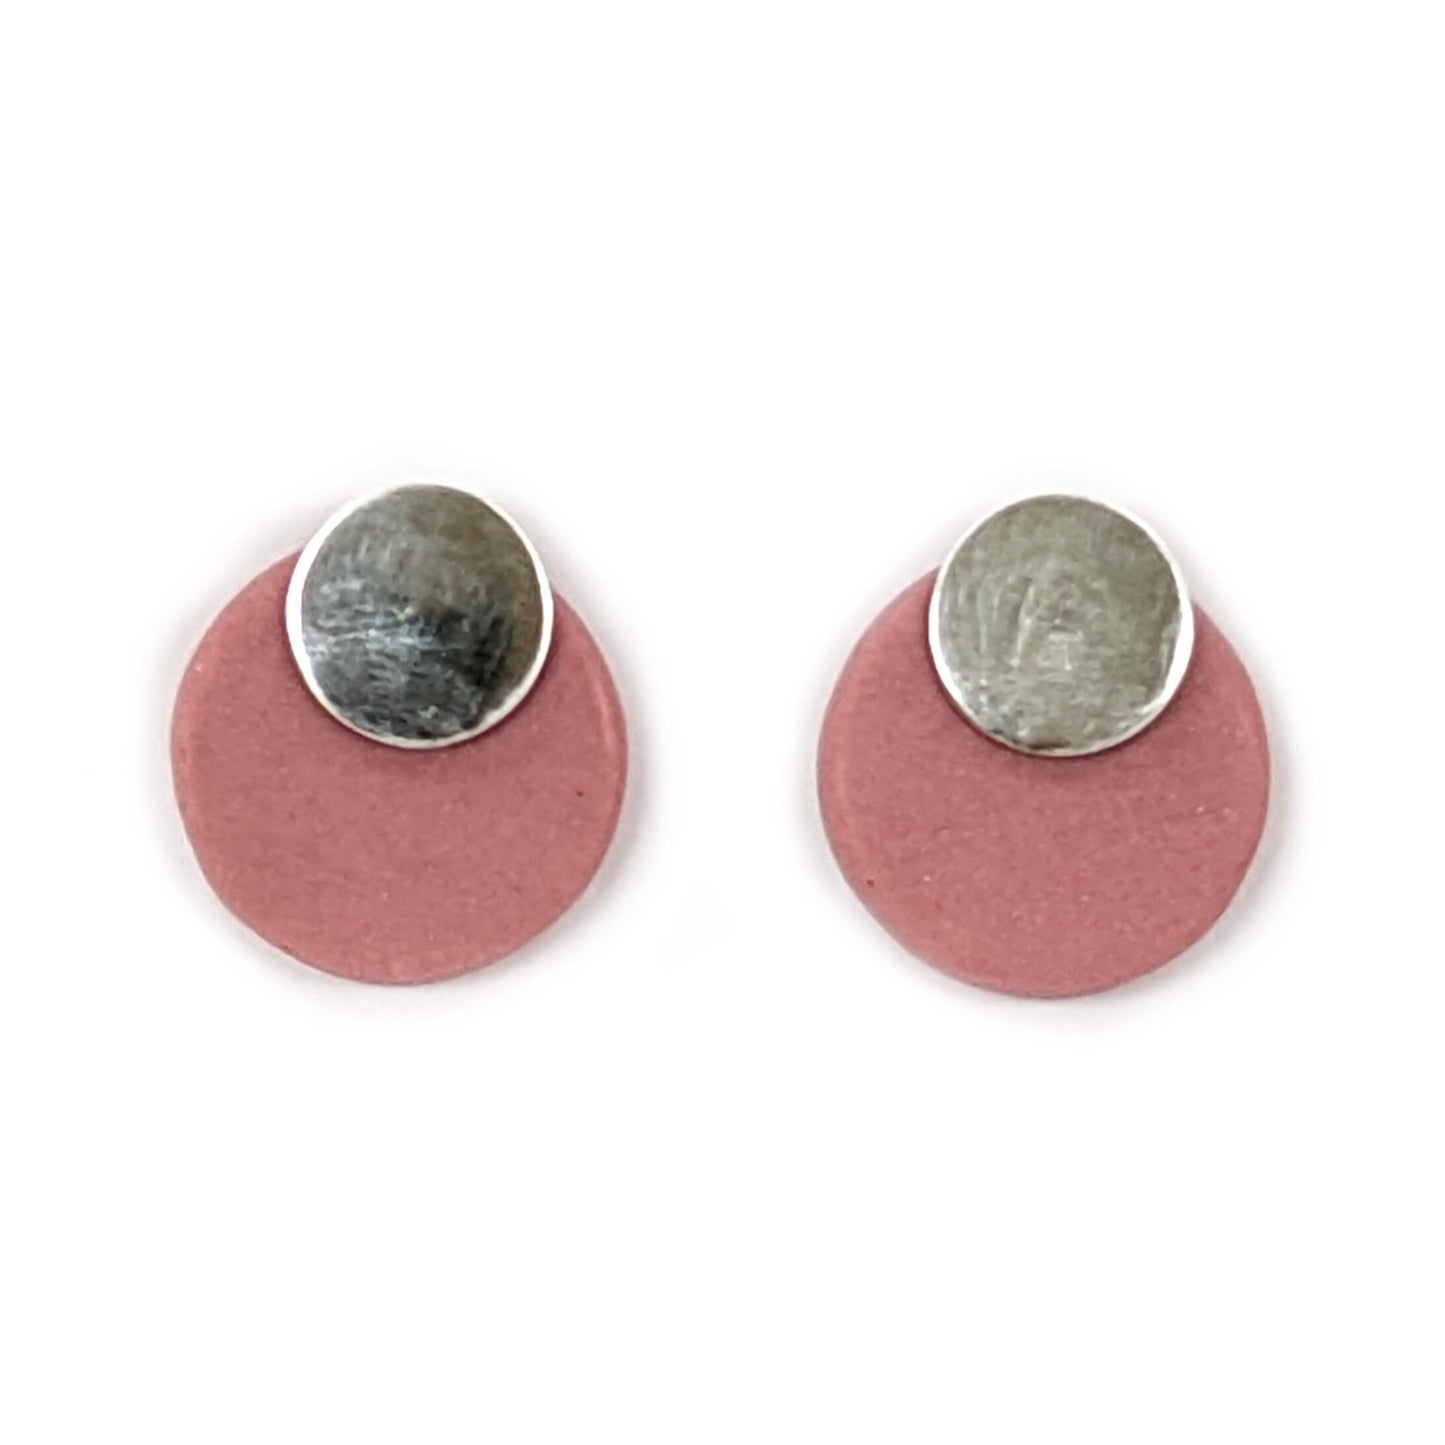 Double Circle Earrings by Tanya Long